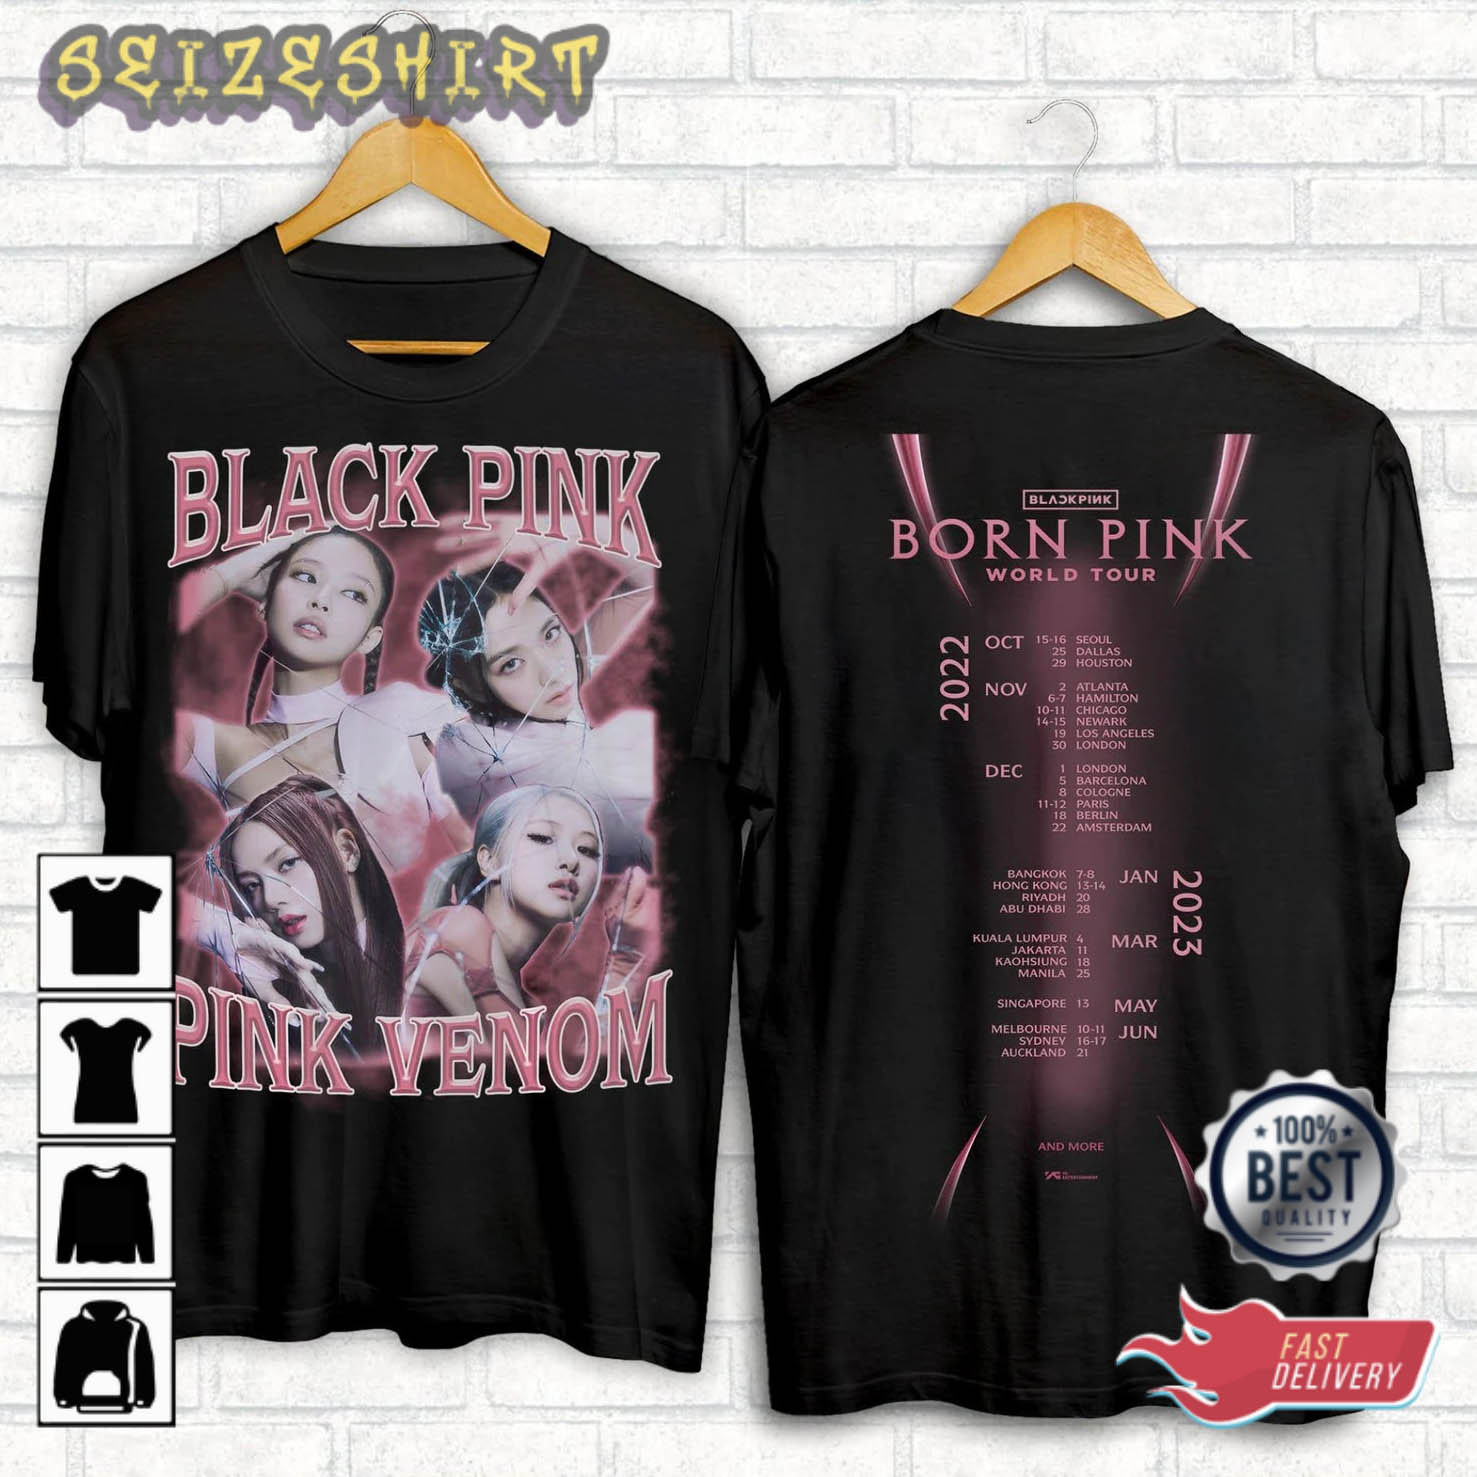 BLACKPINK Shirt - Black Pink Pink Venom Shirt